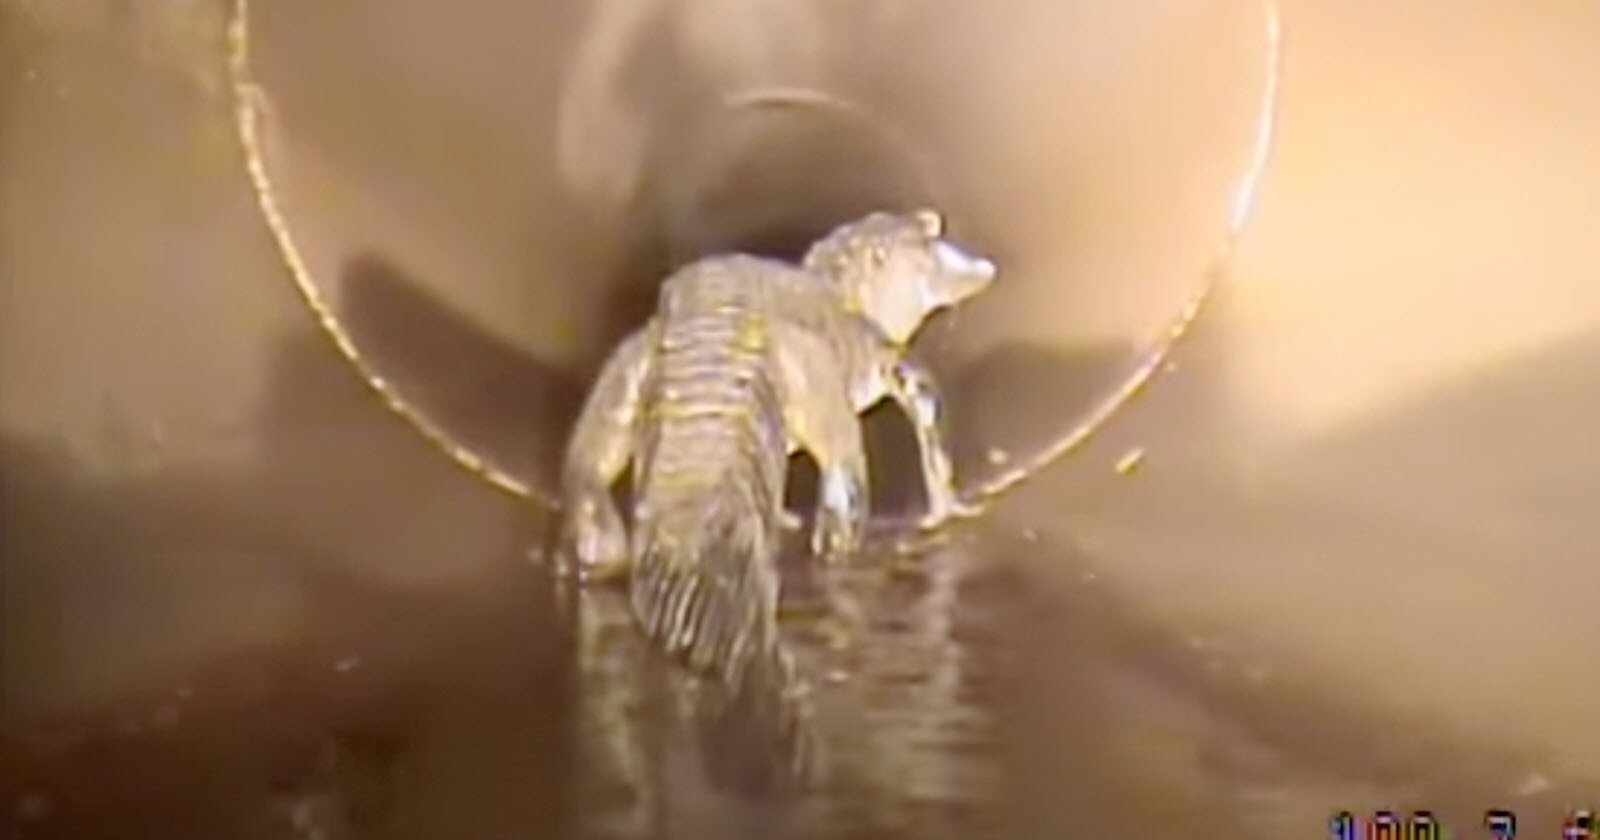  robotic camera encounters 5-foot alligator inside storm drain 